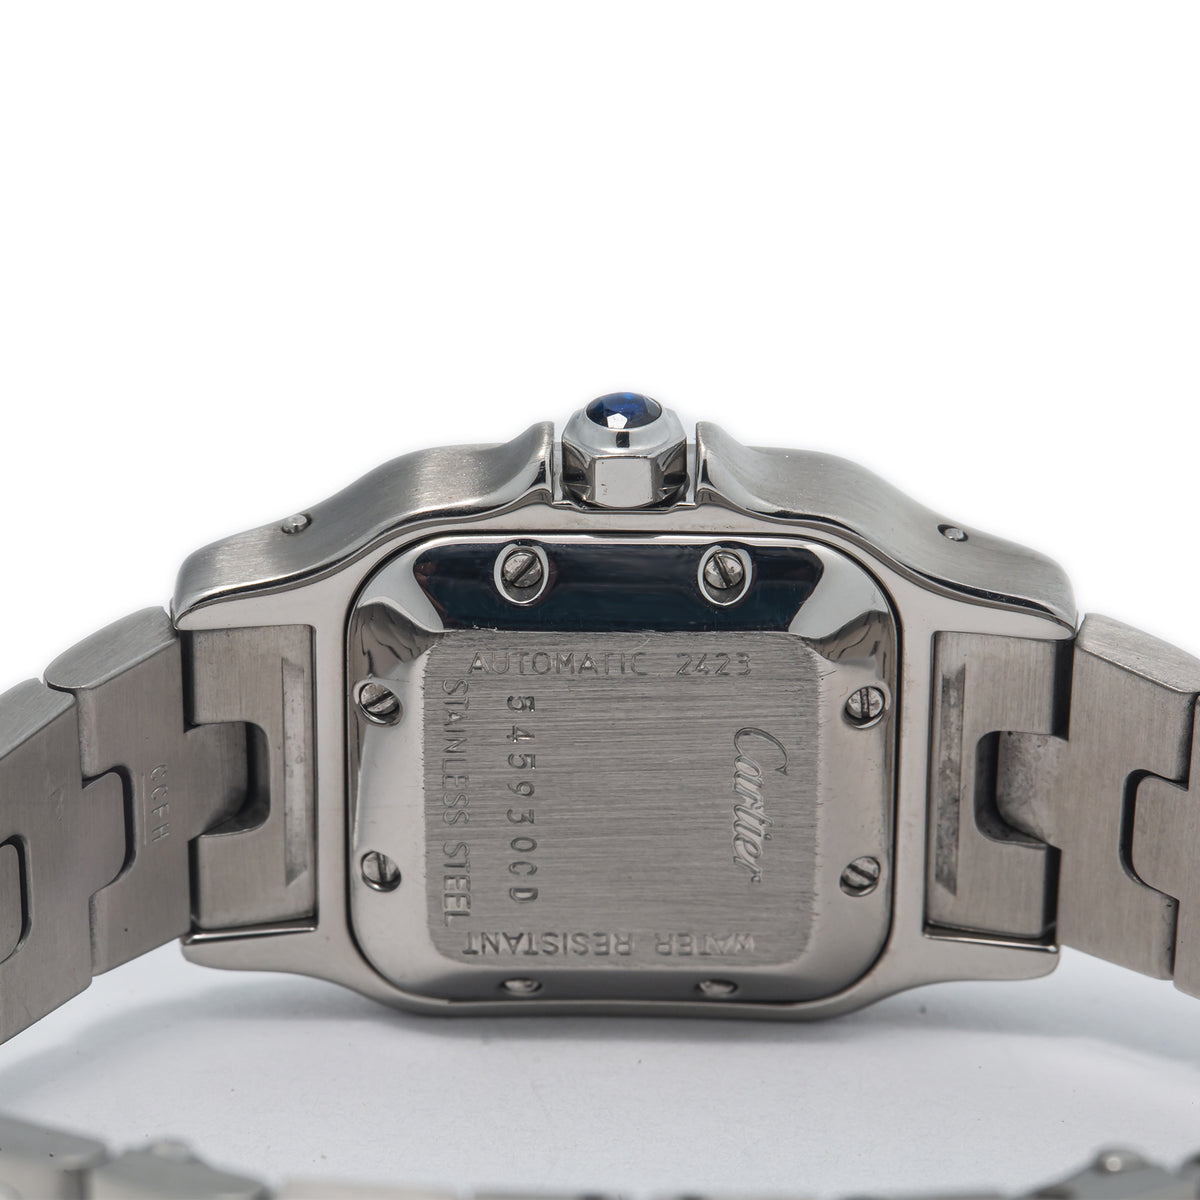 Cartier Santos Galbee 2423 W20044D6 Steel Roman Silver Dial Automatic Watch 24mm